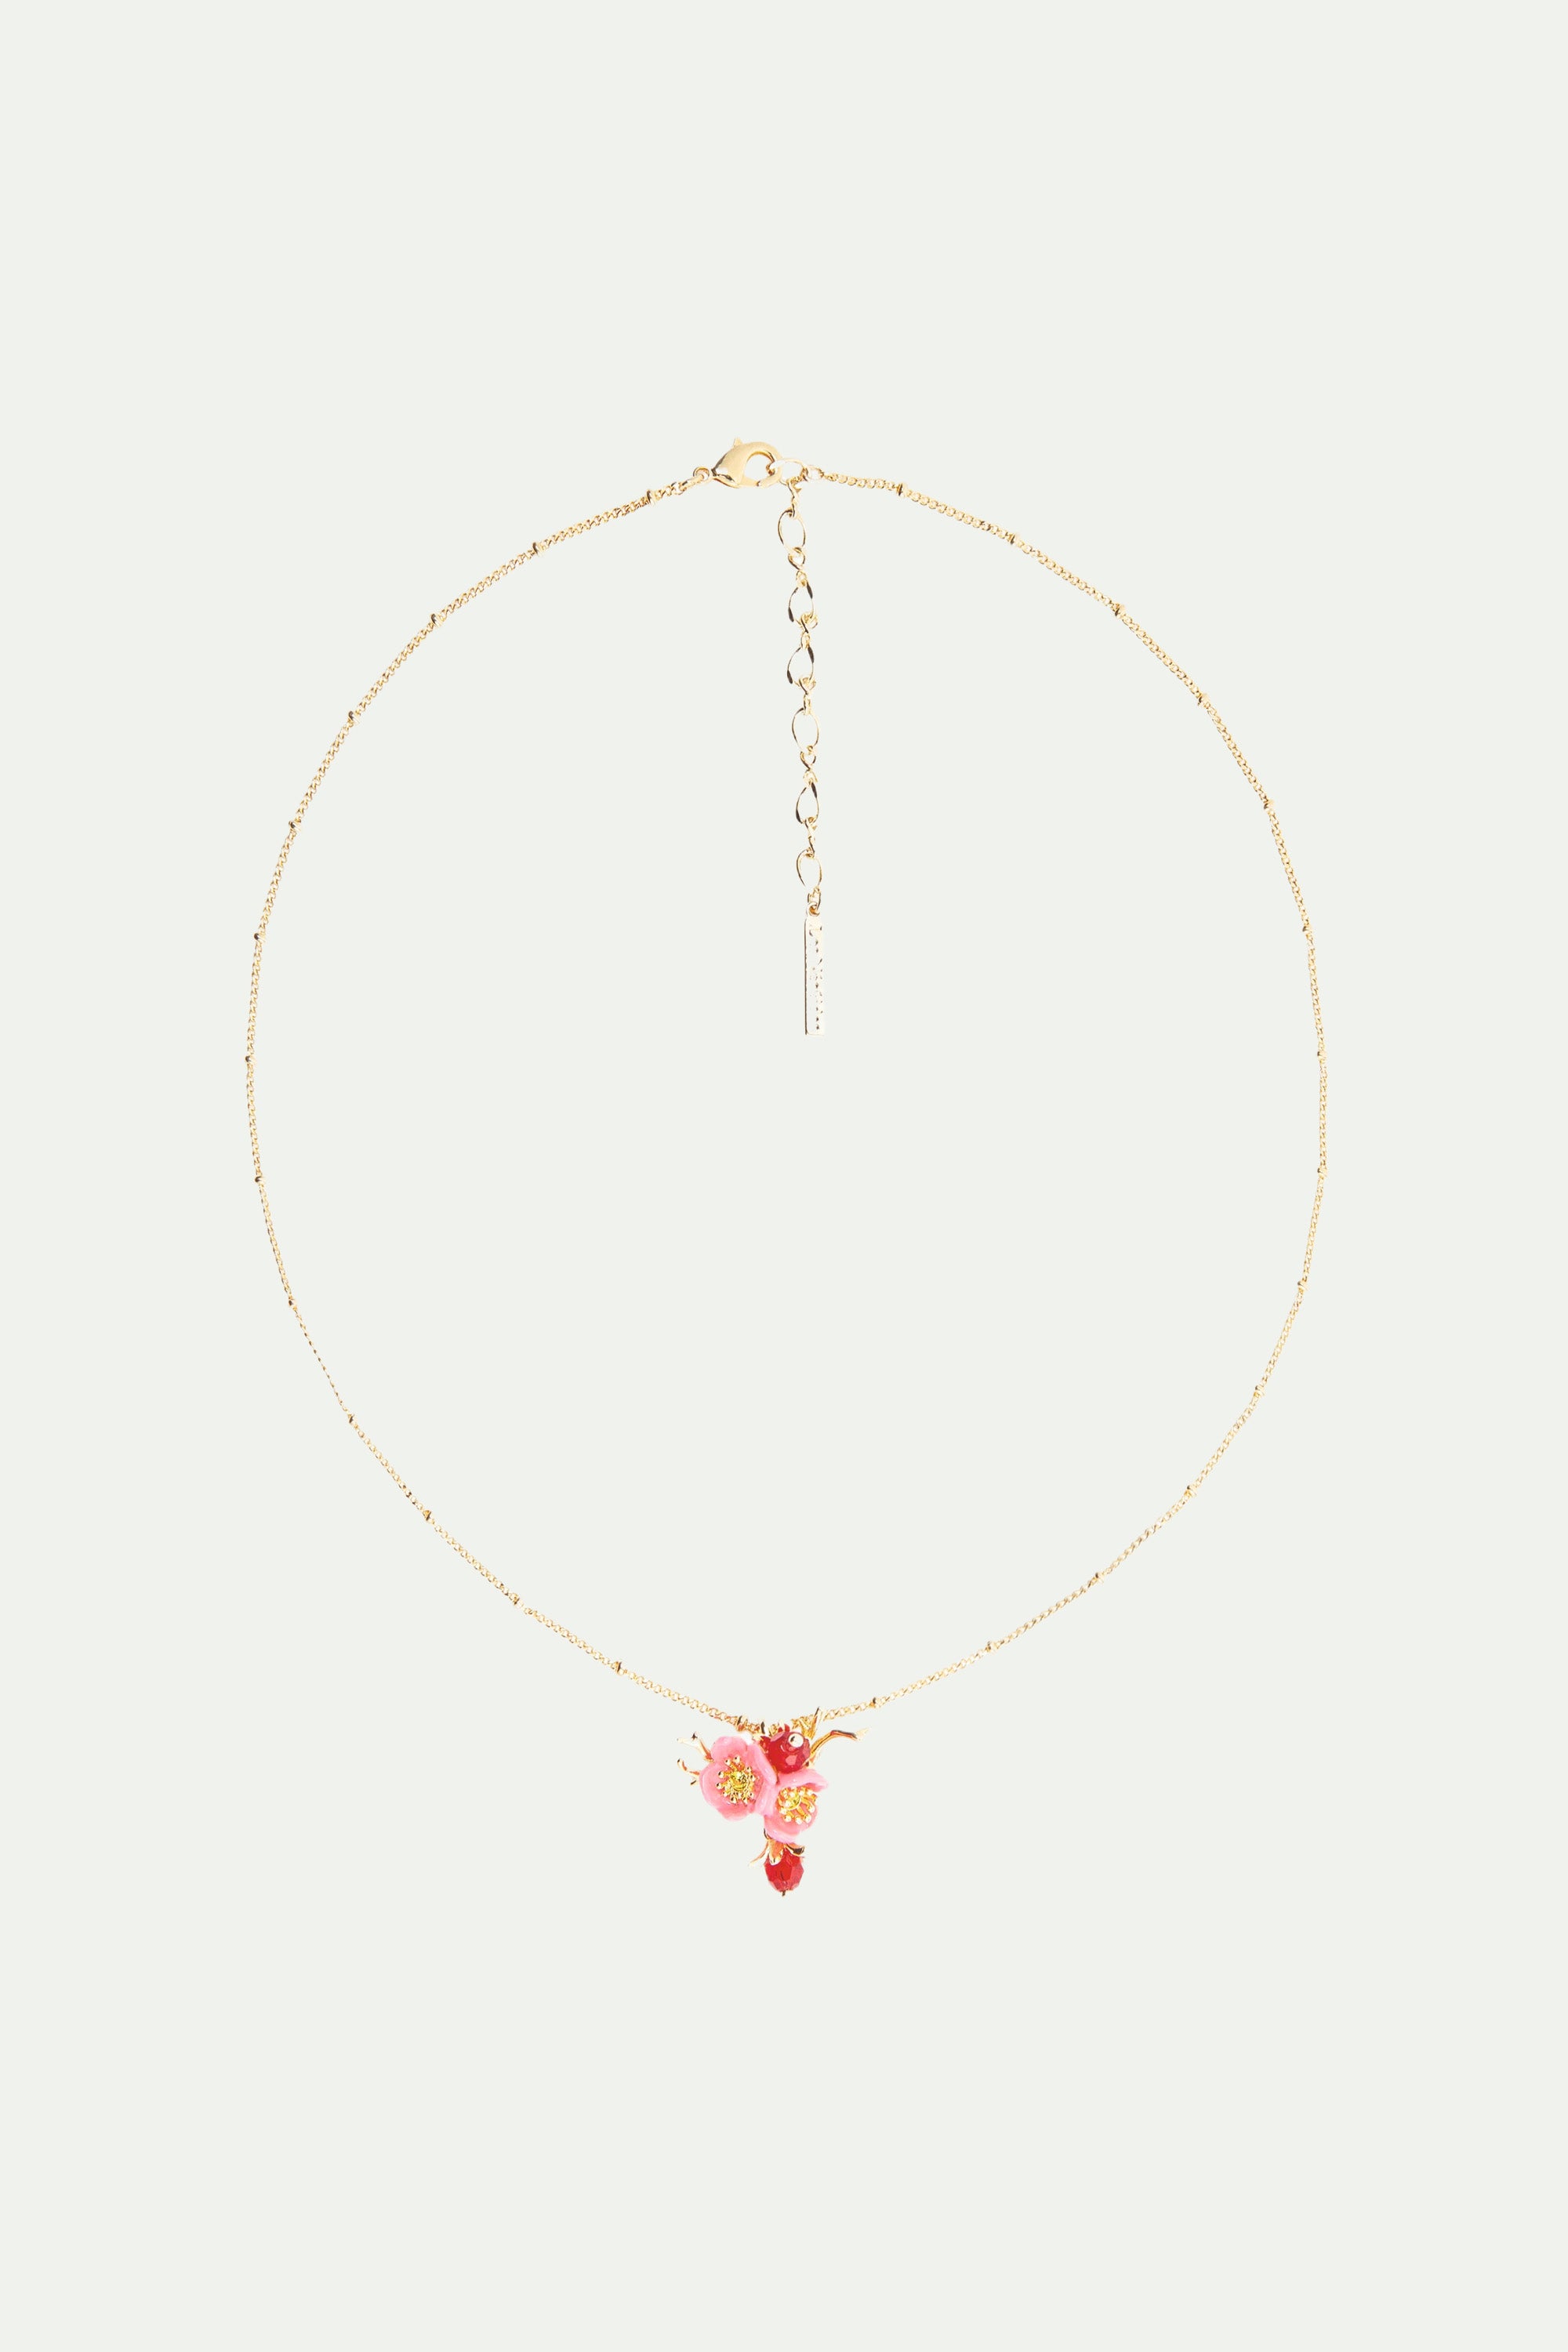 Plum blossom pendant necklace